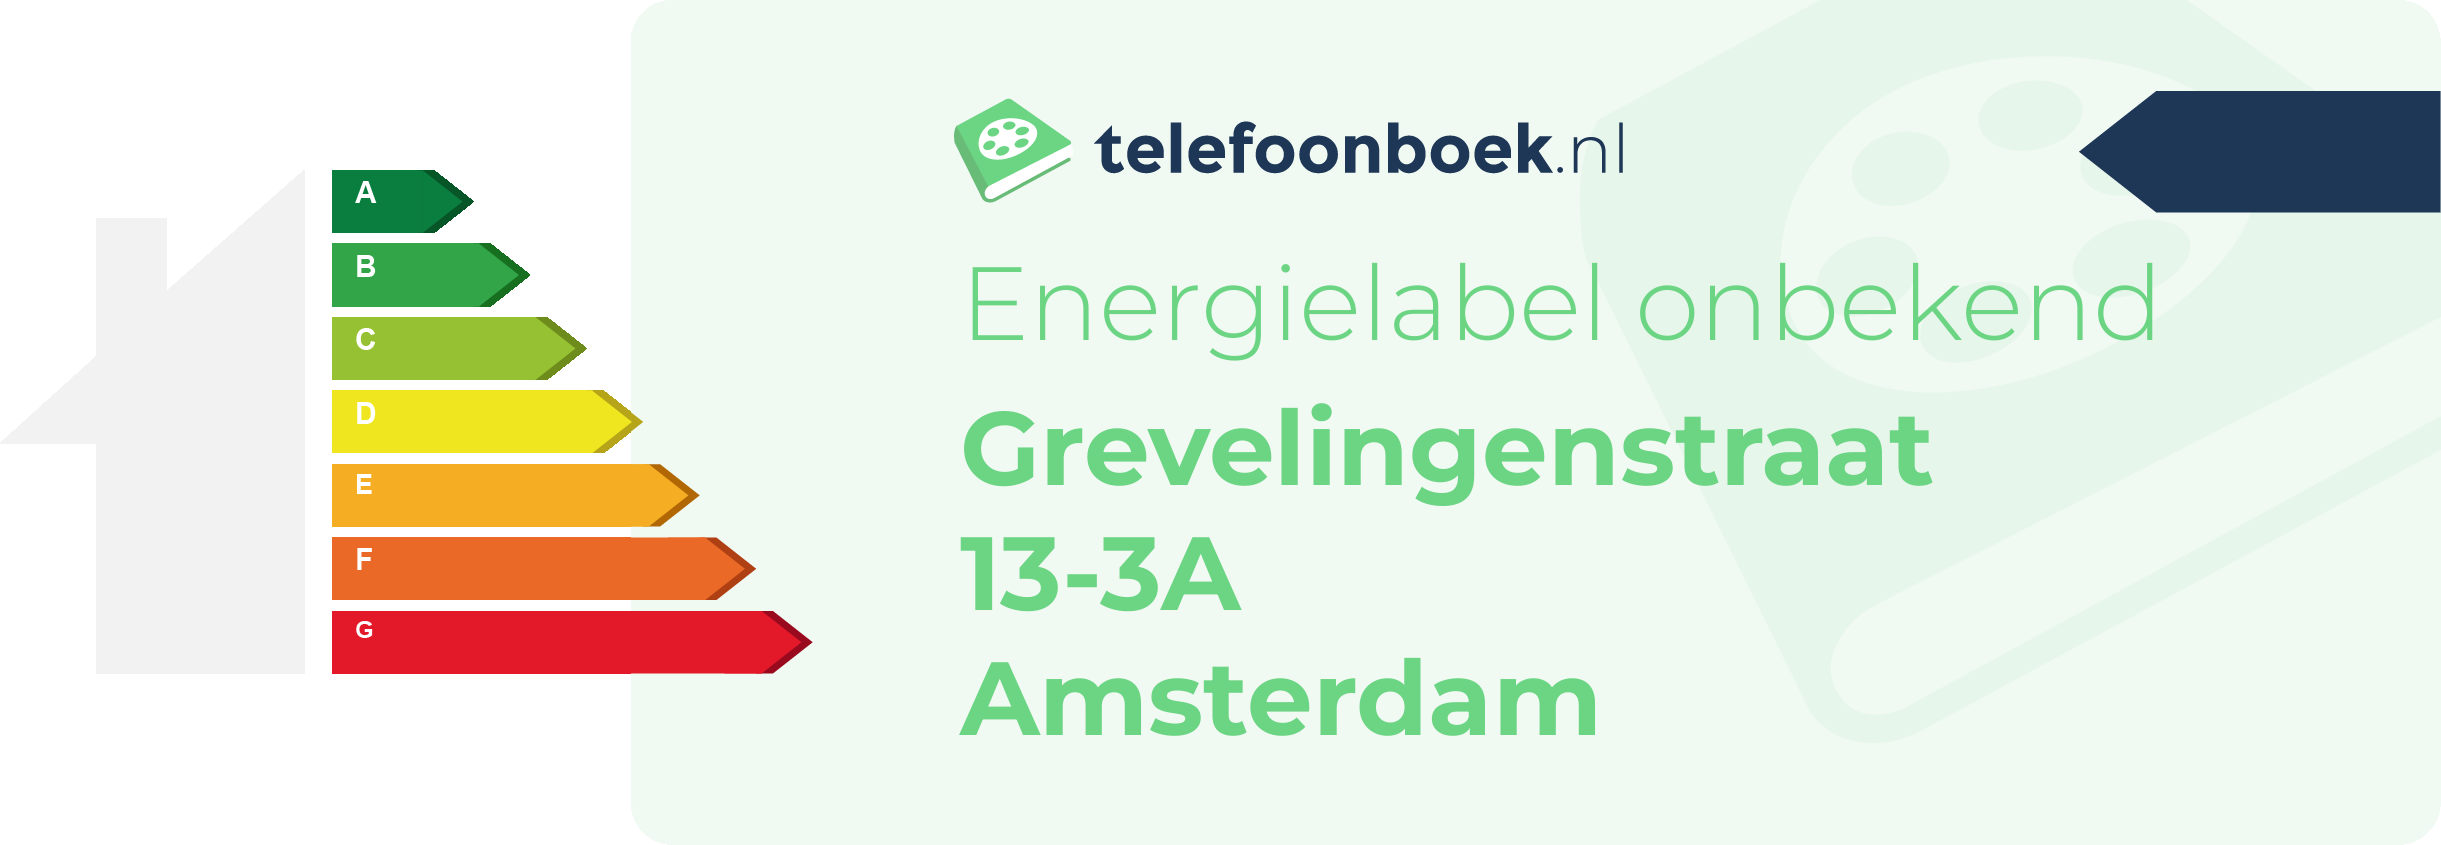 Energielabel Grevelingenstraat 13-3A Amsterdam